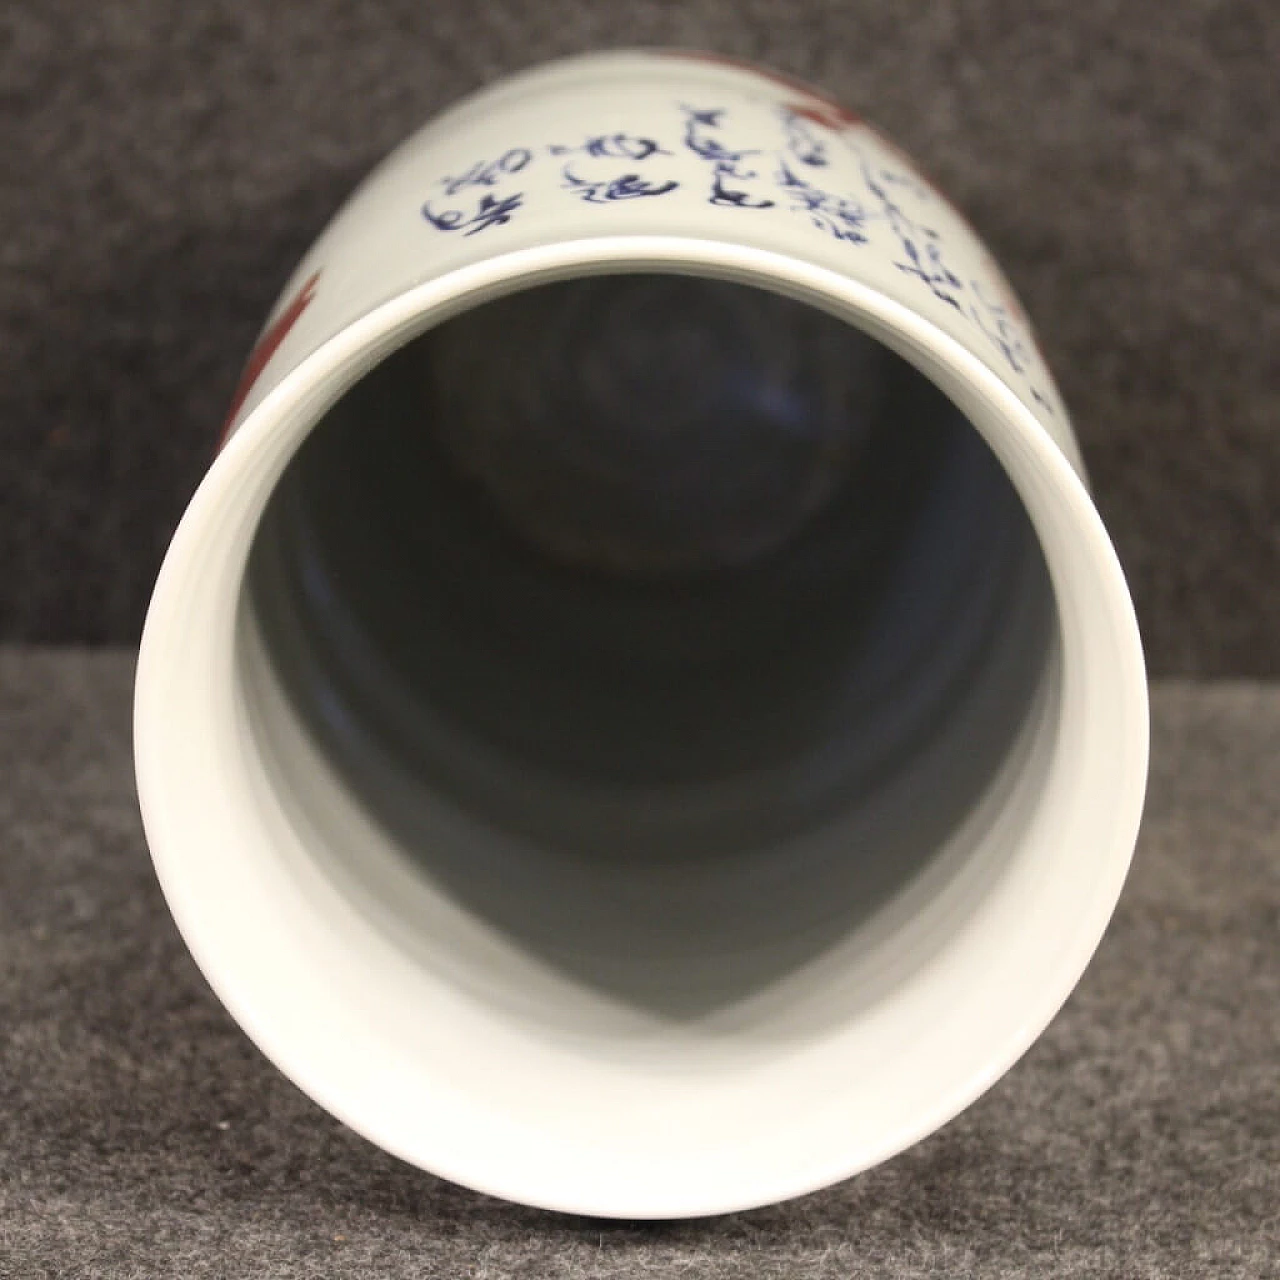 Vaso cinese in ceramica con paesaggio 1108808